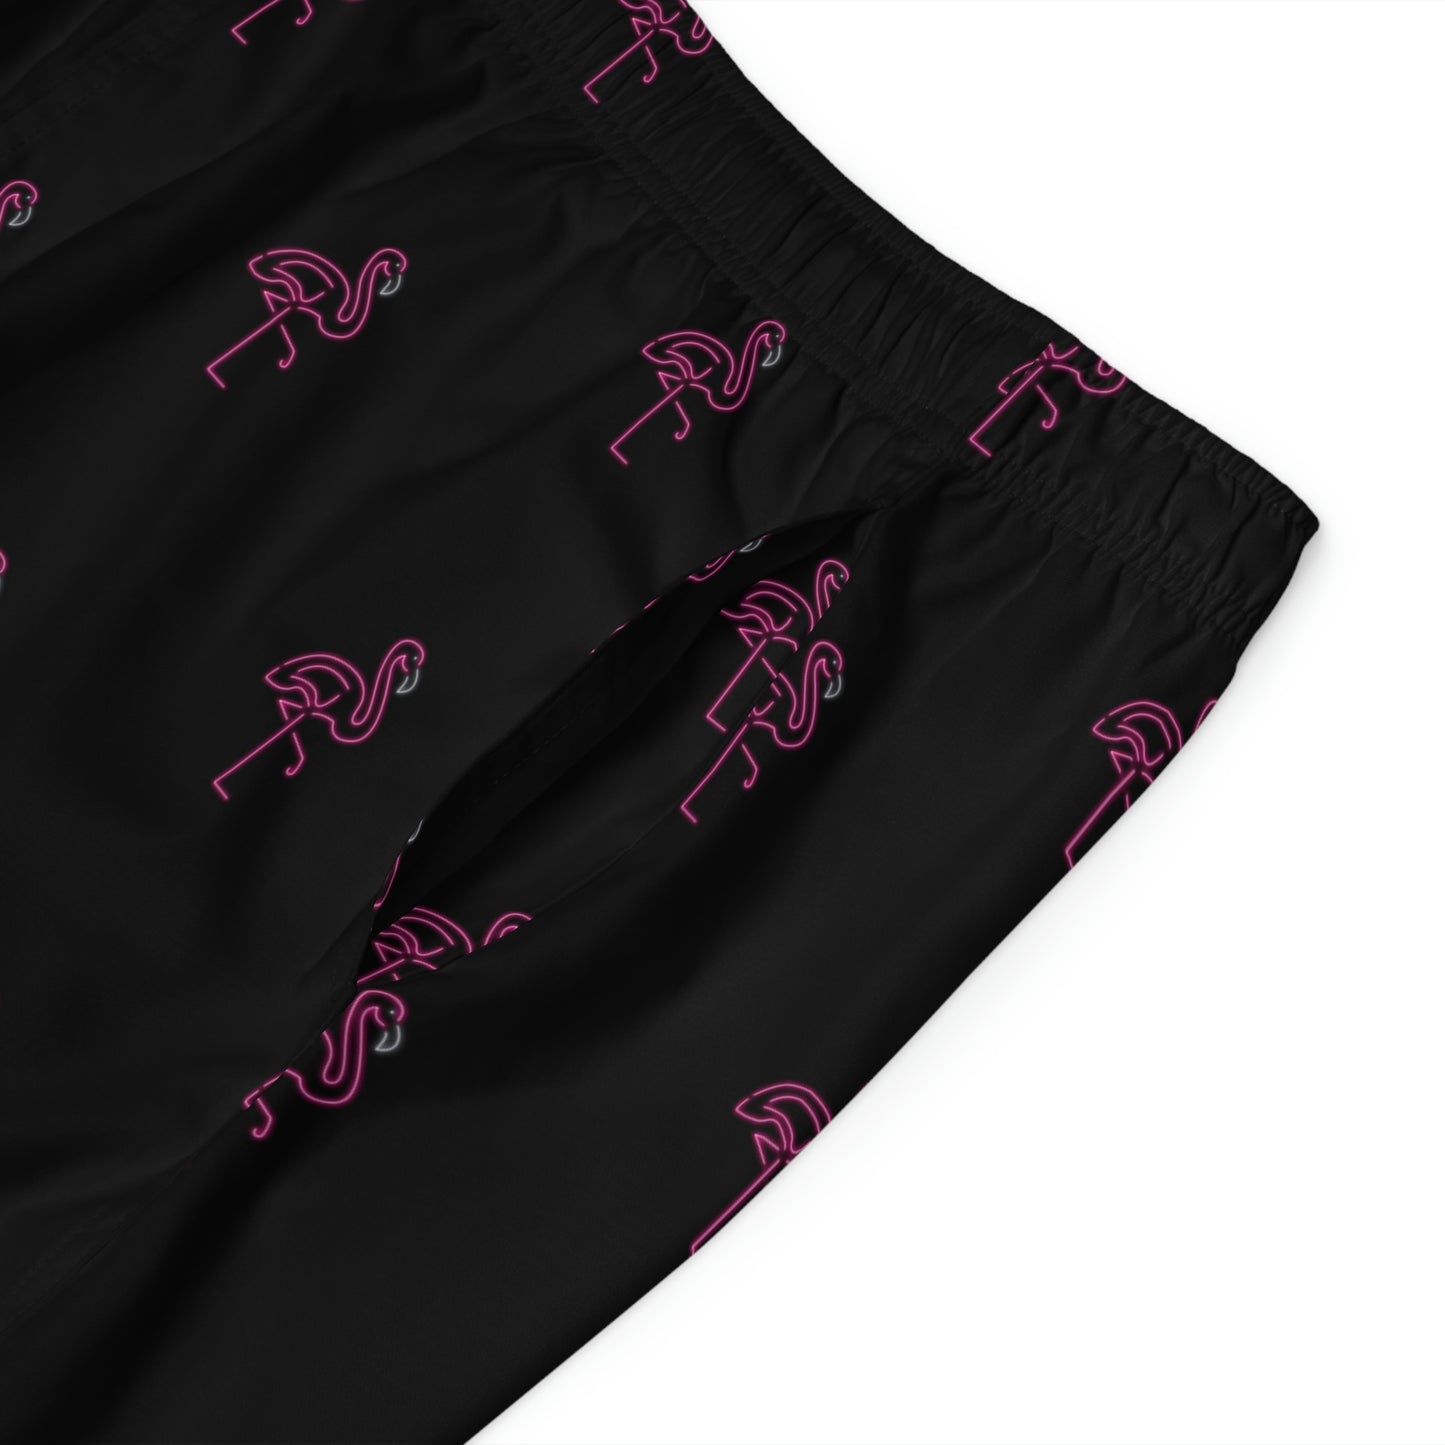 Neon Pink Flamingo–Men's Board Shorts (AOP)